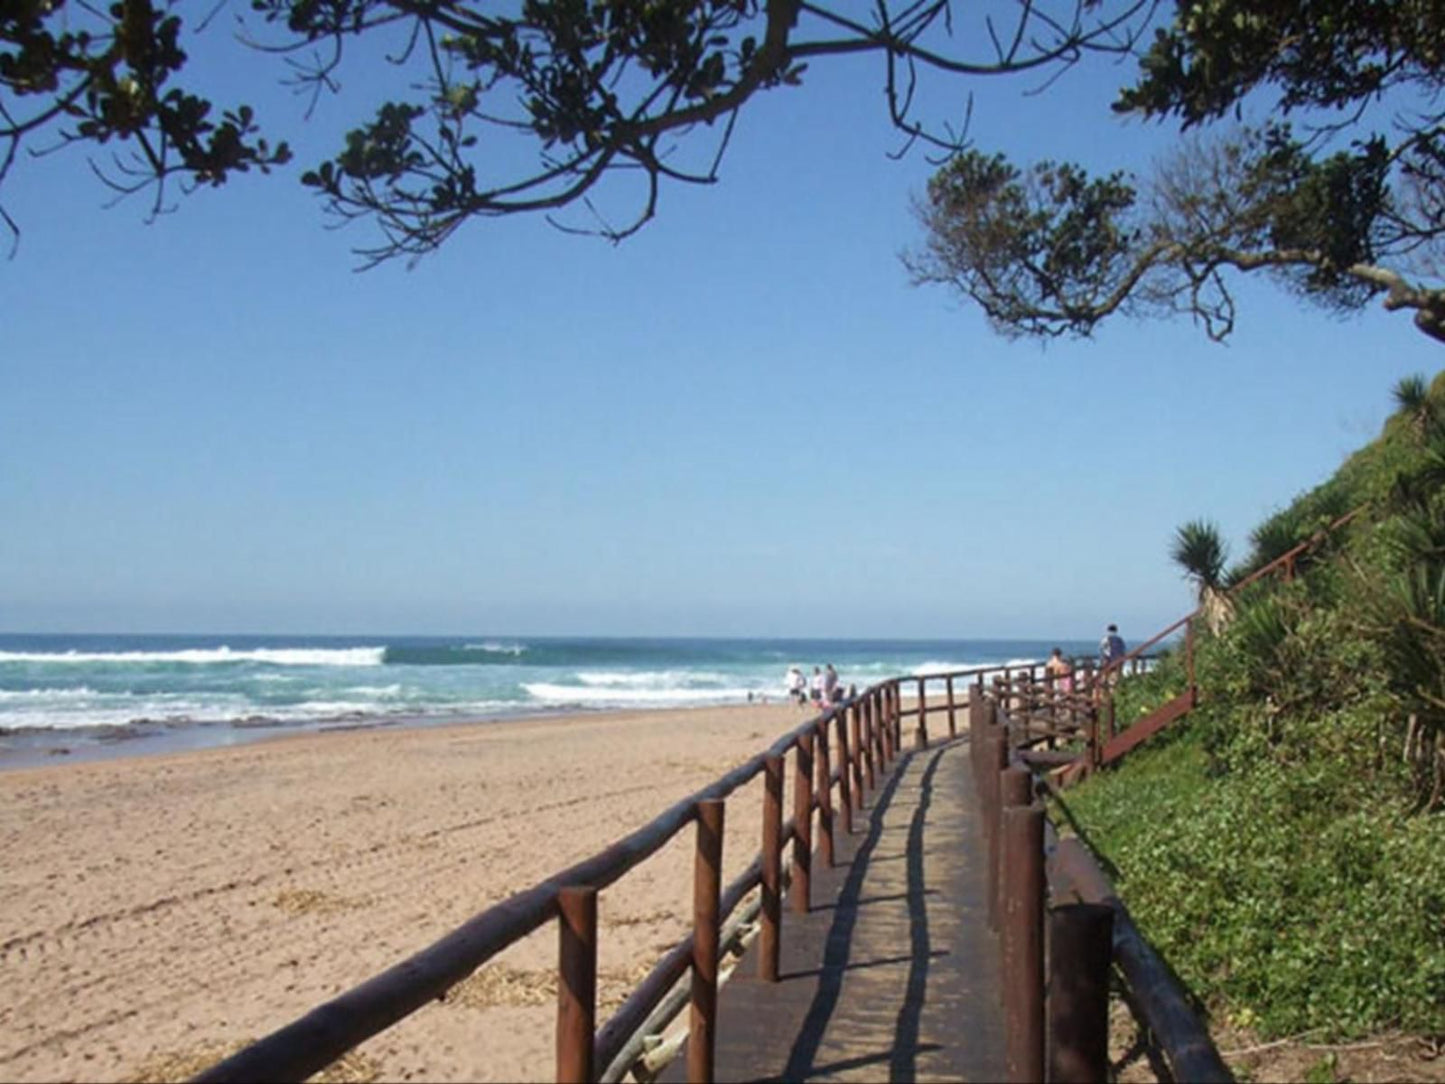 Ocean Rush Zinkwazi Beach Nkwazi Kwazulu Natal South Africa Complementary Colors, Beach, Nature, Sand, Palm Tree, Plant, Wood, Ocean, Waters